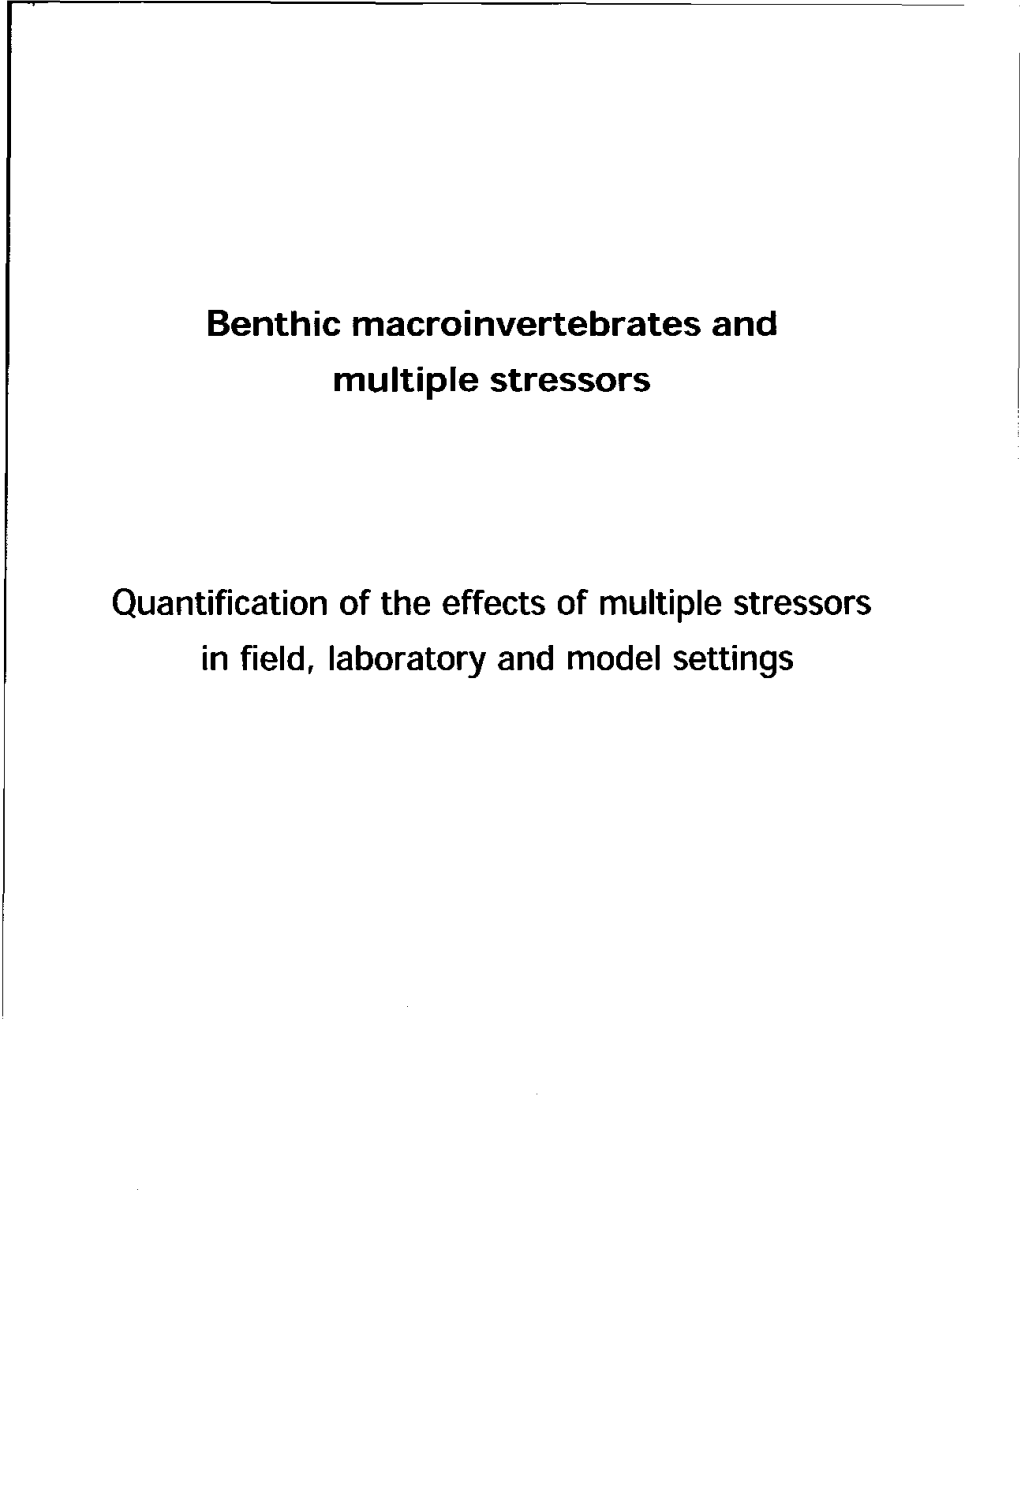 Benthic Macroinvertebrates and Multiple Stressors